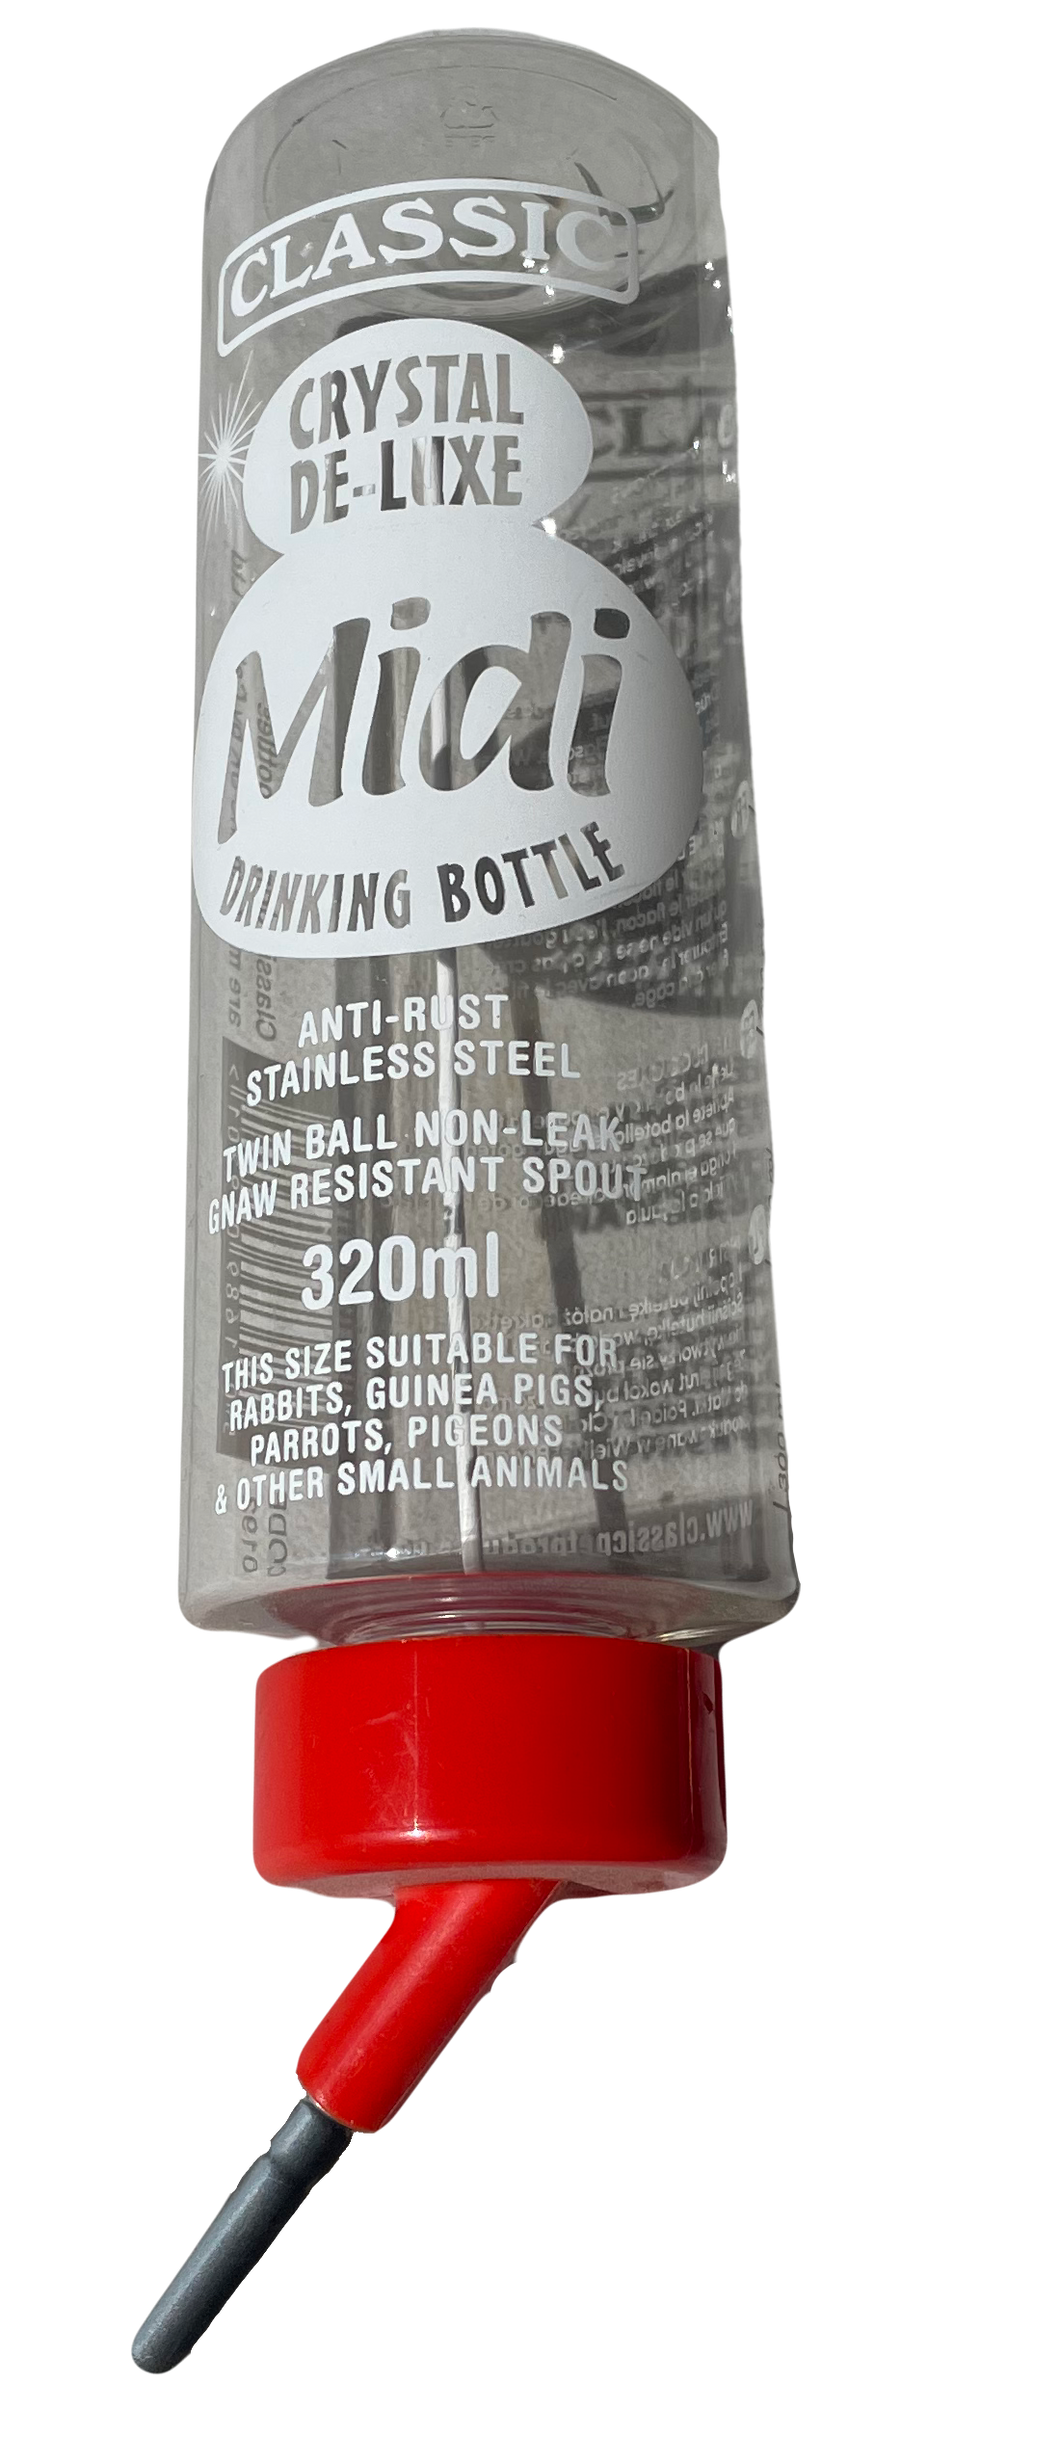 Classic Midi Drinking Bottle 320ml